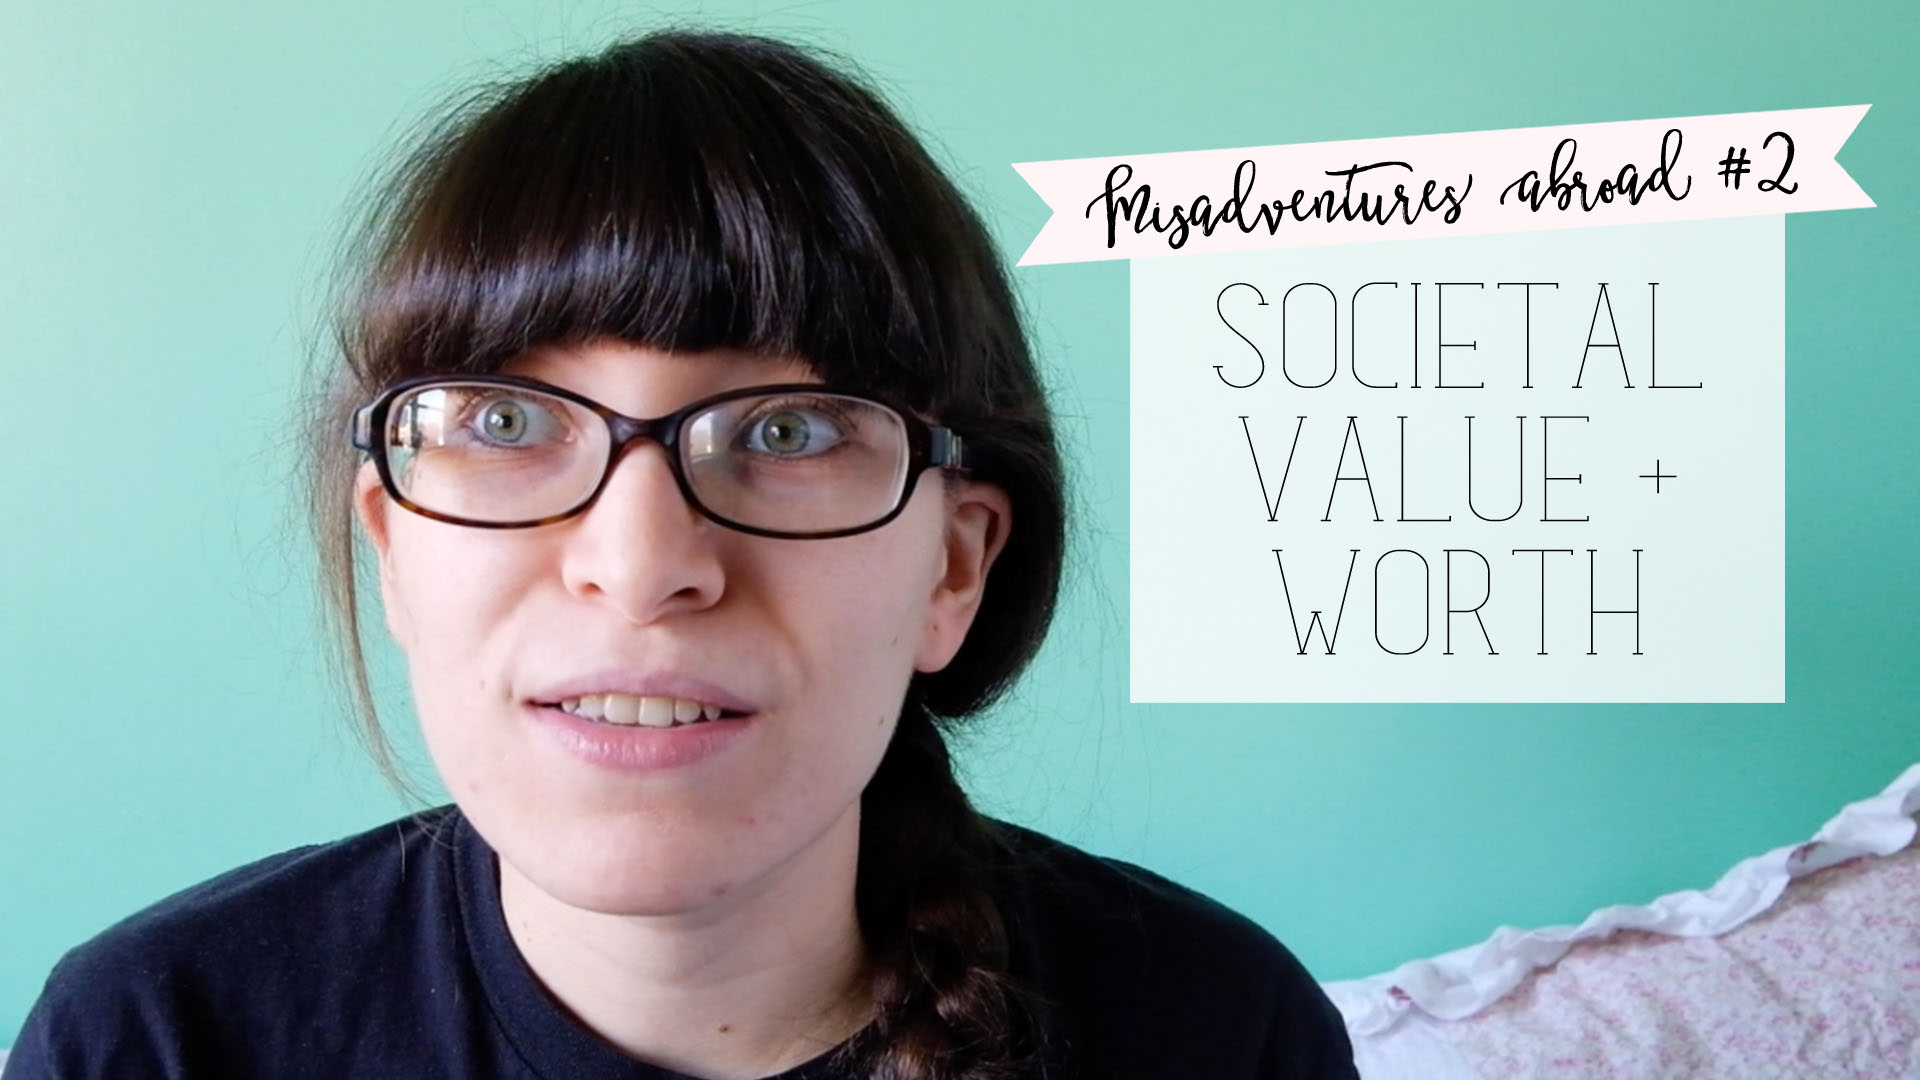 episode 2: societal value + worth